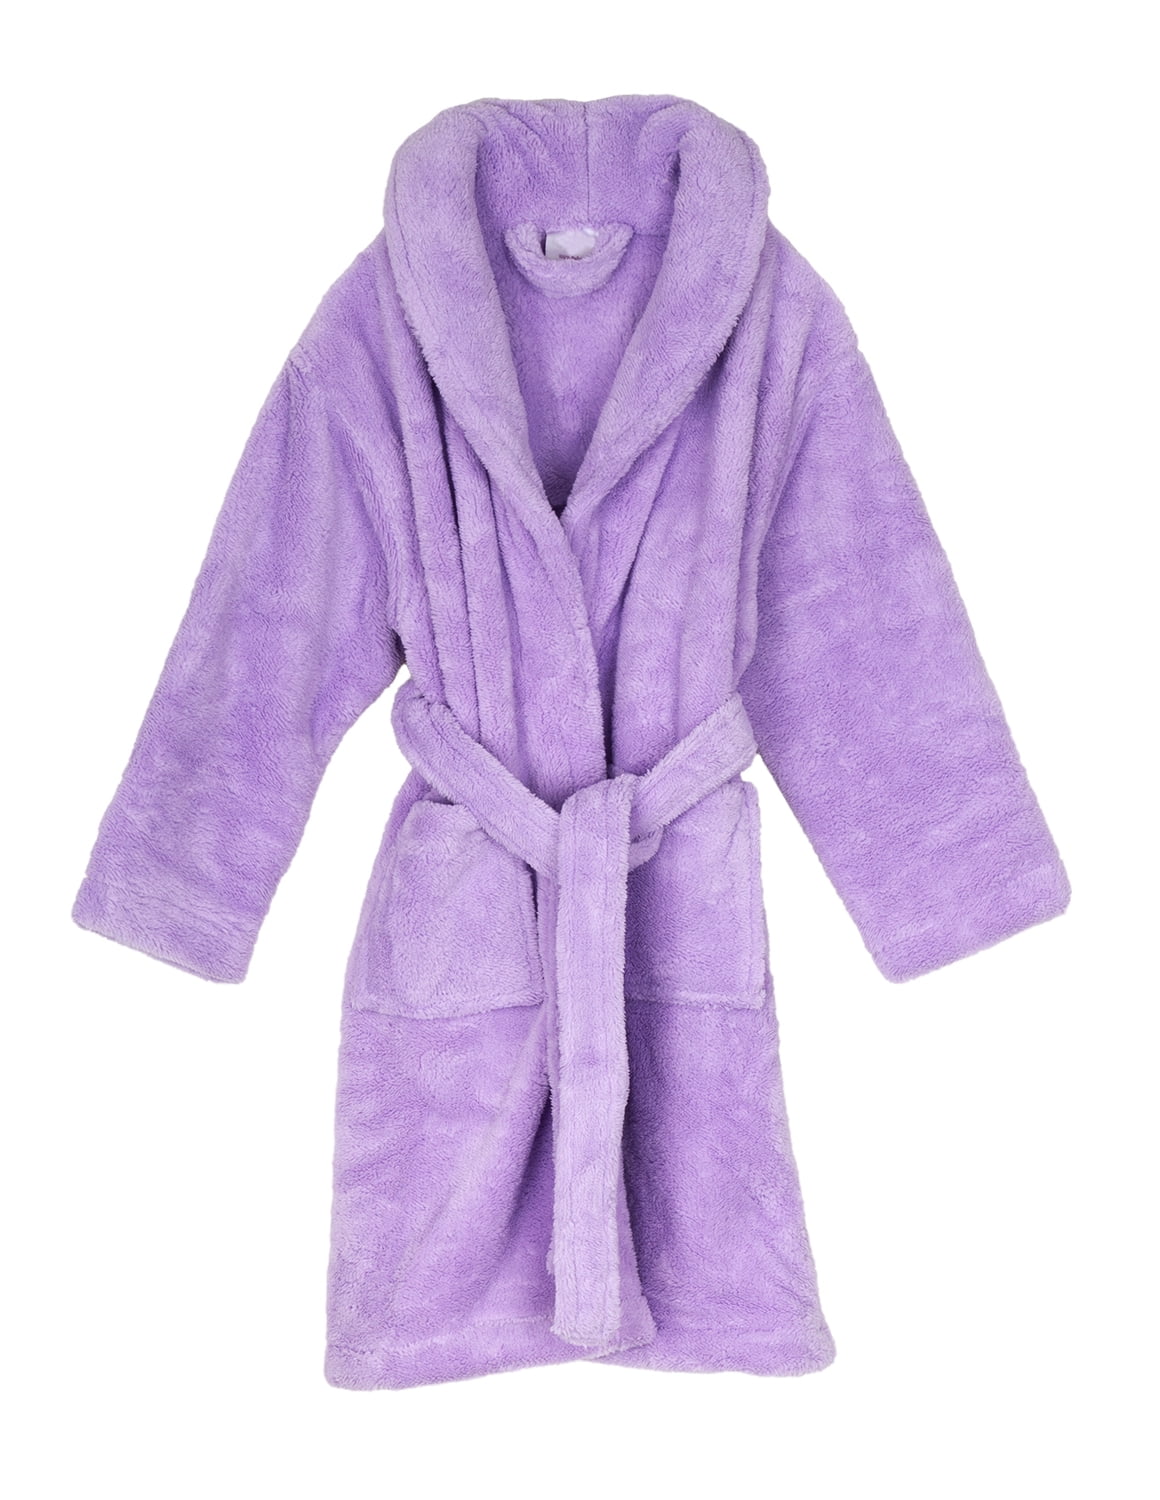 TowelSelections Girls Robe, Kids Plush Shawl Fleece Bathrobe - Walmart.com